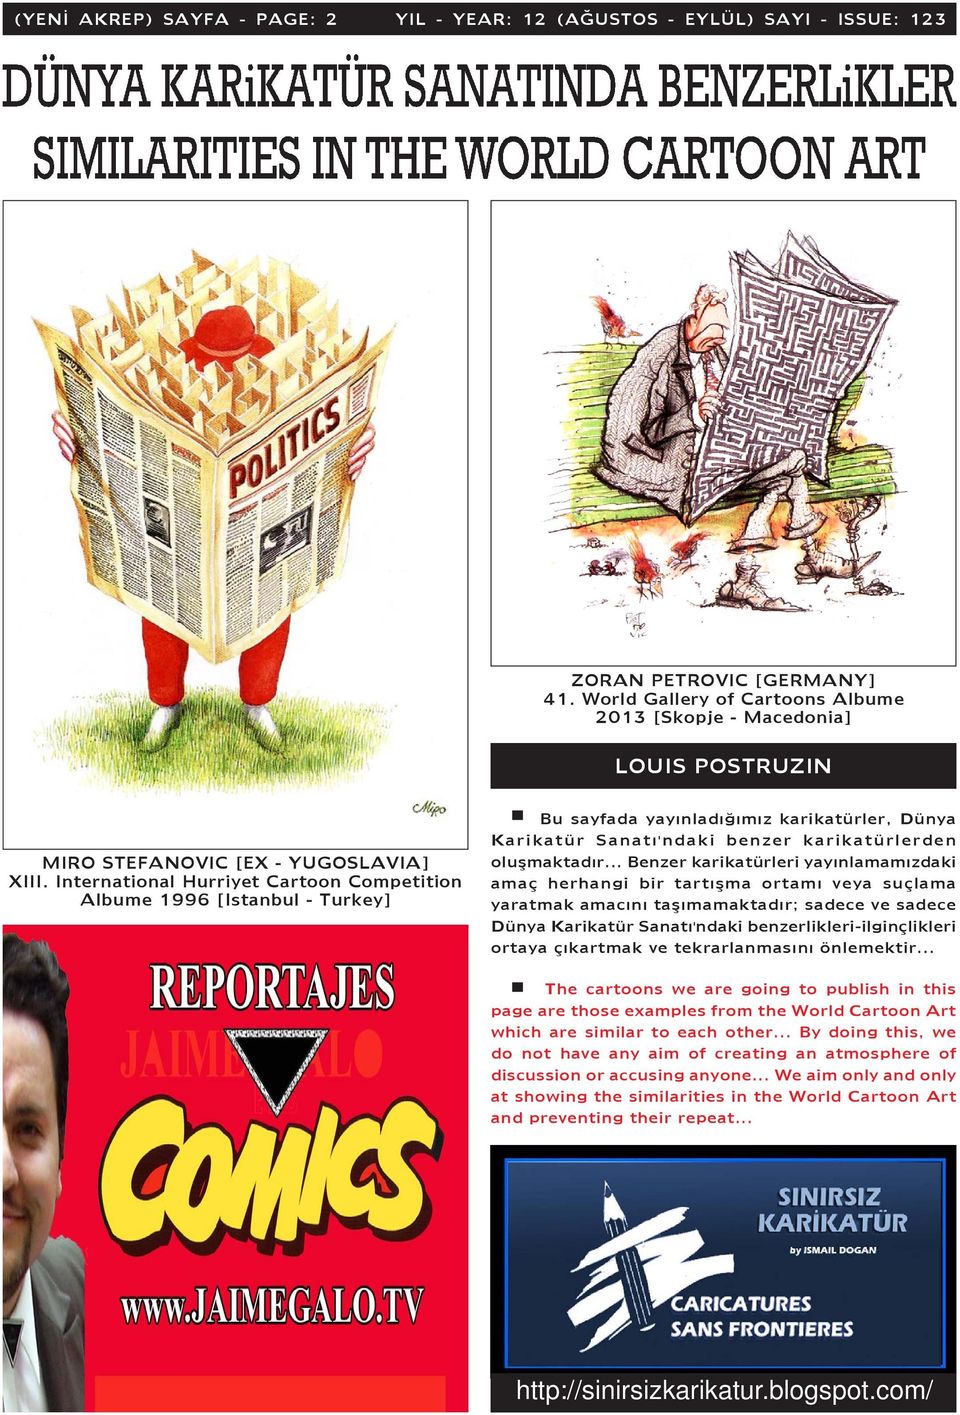 International Hurriyet Cartoon Competition Albume 1996 [Istanbul - Turkey] Bu sayfada yayýnladýðýmýz karikatürler, Dünya Karikatür Sanatý'ndaki benzer karikatürlerden oluþmaktadýr.